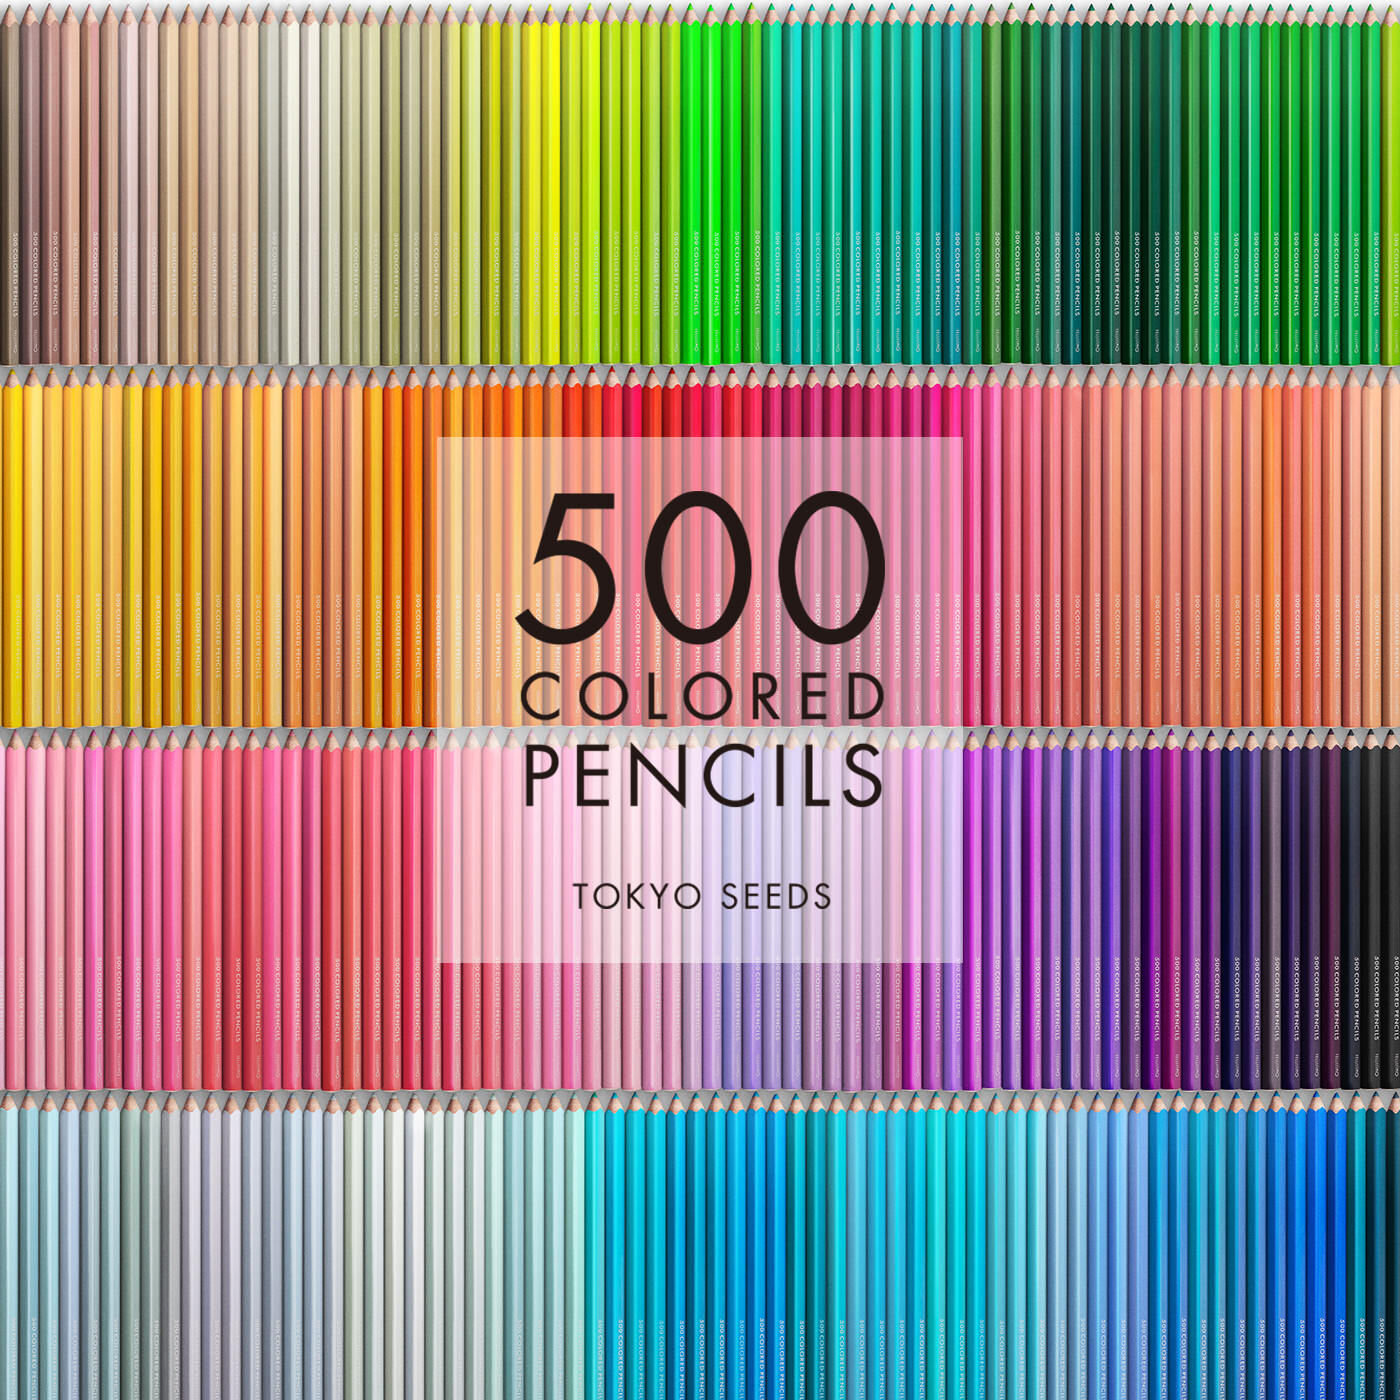 Real Stock|【47/500 HULA HOOPS】500色の色えんぴつ TOKYO SEEDS|1992年、世界初の「500色」という膨大な色数の色えんぴつが誕生して以来、その販売数は発売当初から合わせると、世界55ヵ国10万セット以上。今回、メイド・イン・ジャパンにこだわり、すべてが新しく生まれ変わって登場しました。